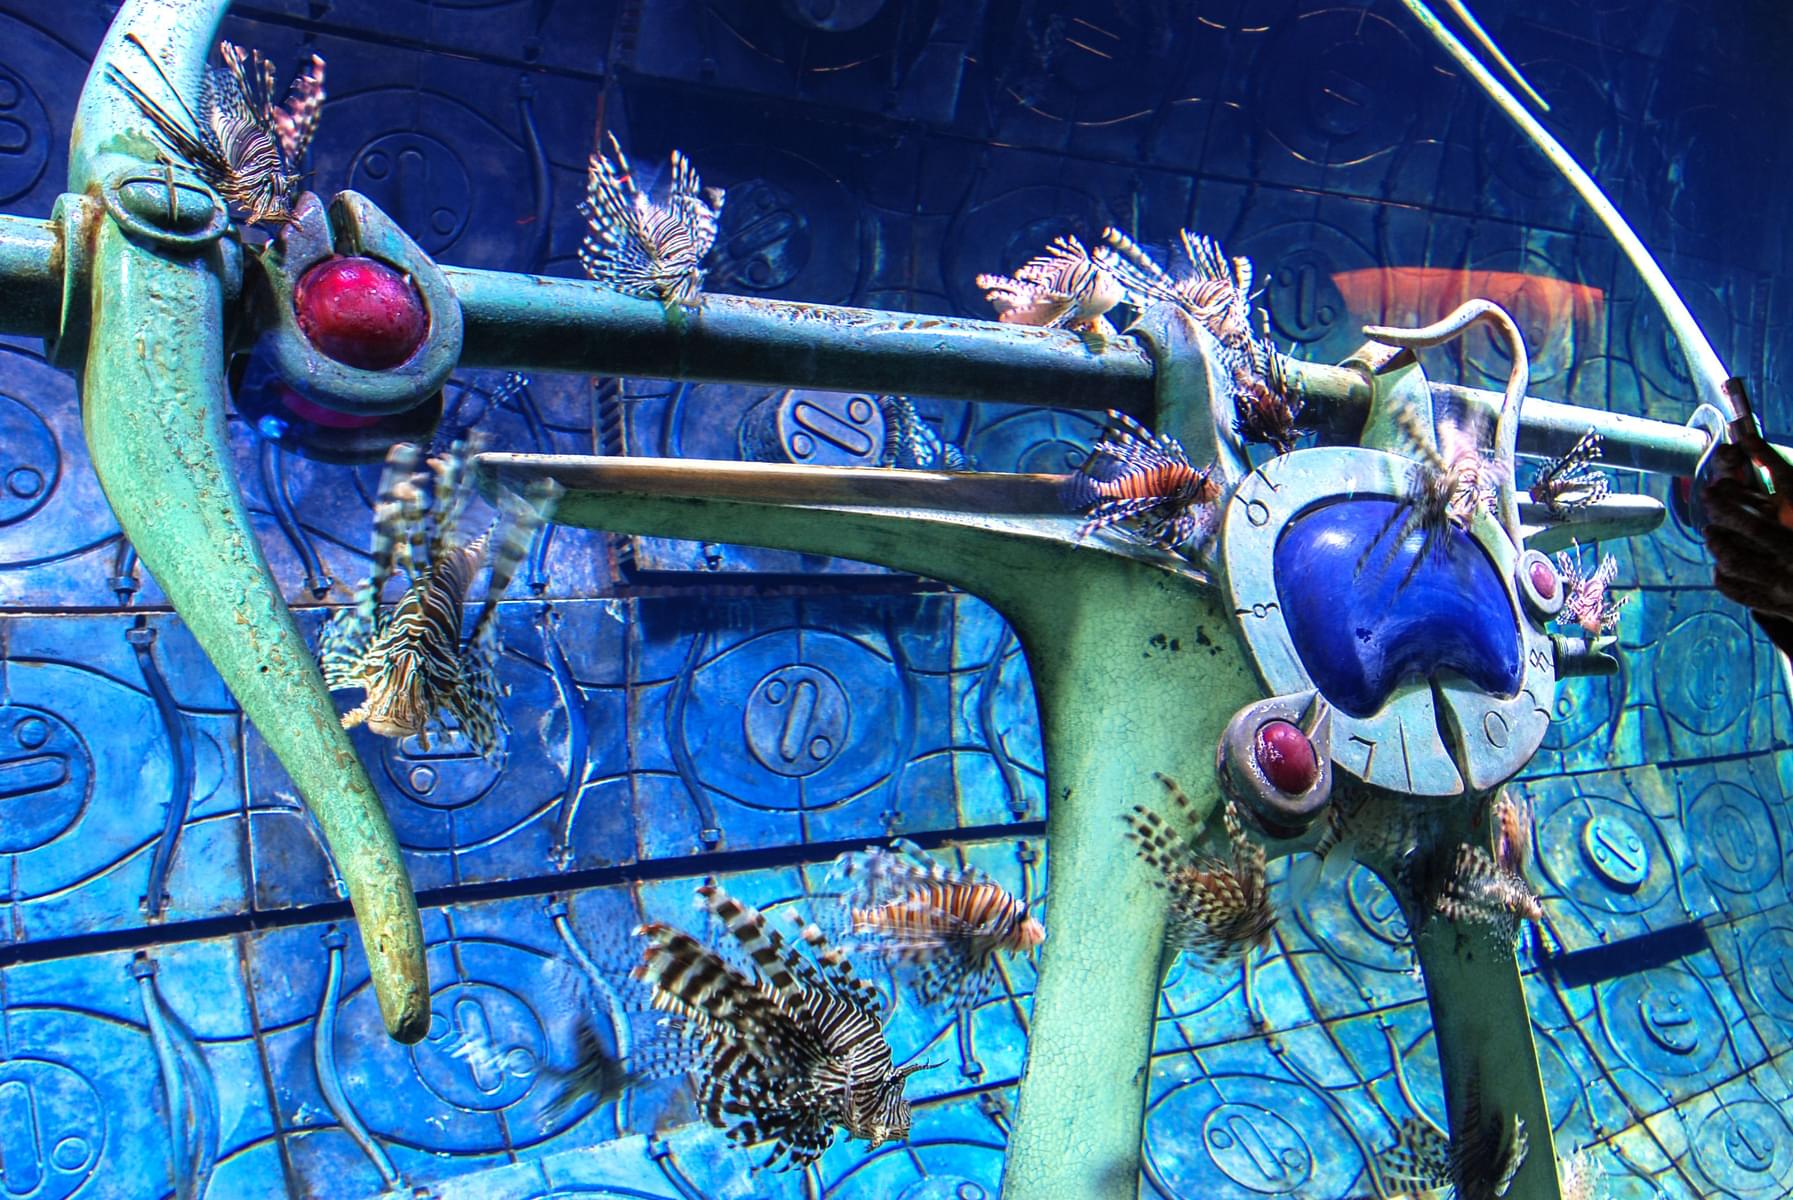 Tips for Visiting The Lost Chambers Aquarium Dubai